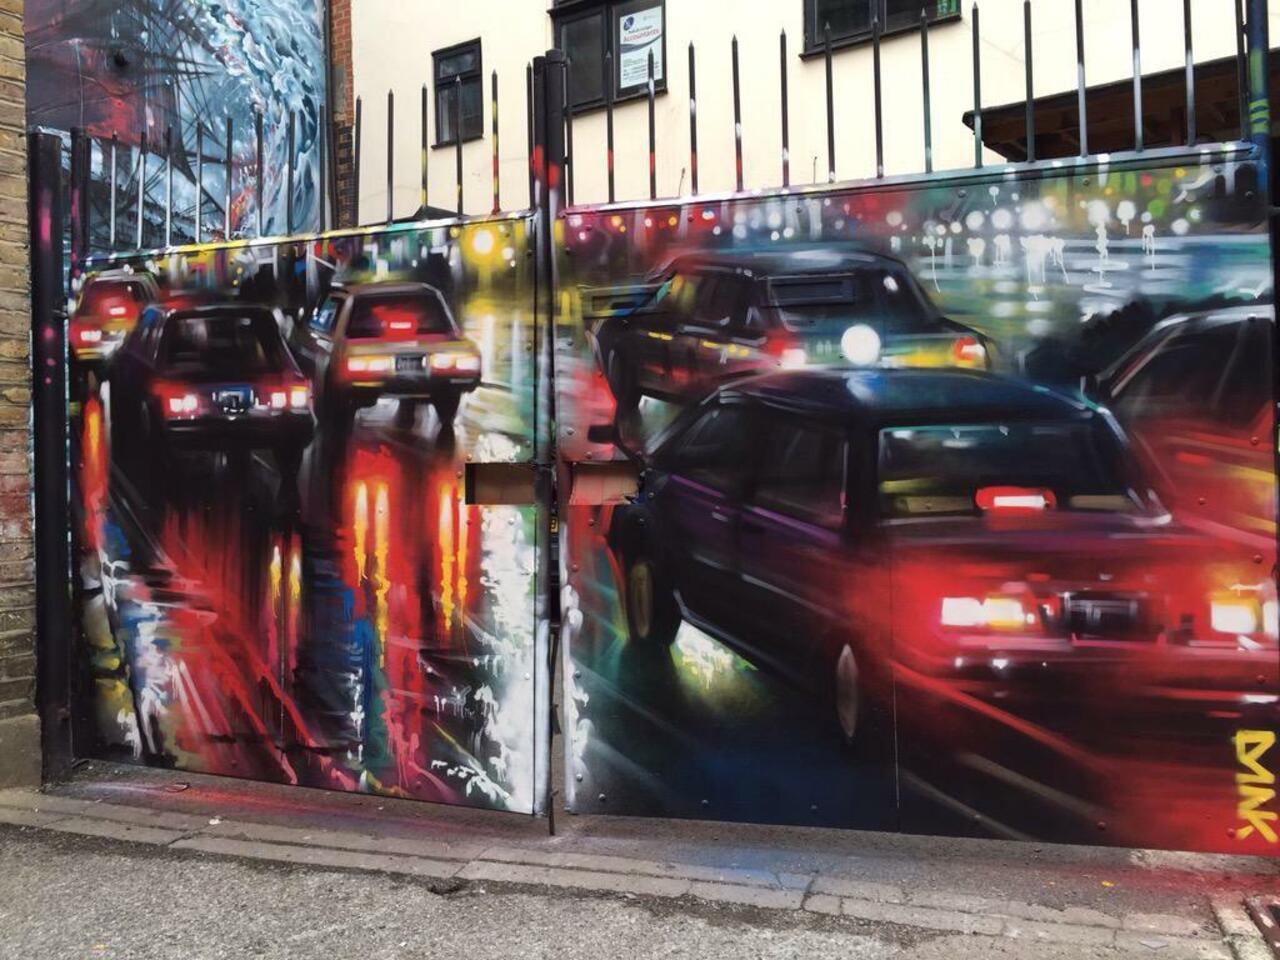 New Street Art by DanKitchener in Brick Lane London 

#art #graffiti #mural #streetart http://t.co/3SyBI6uPGp